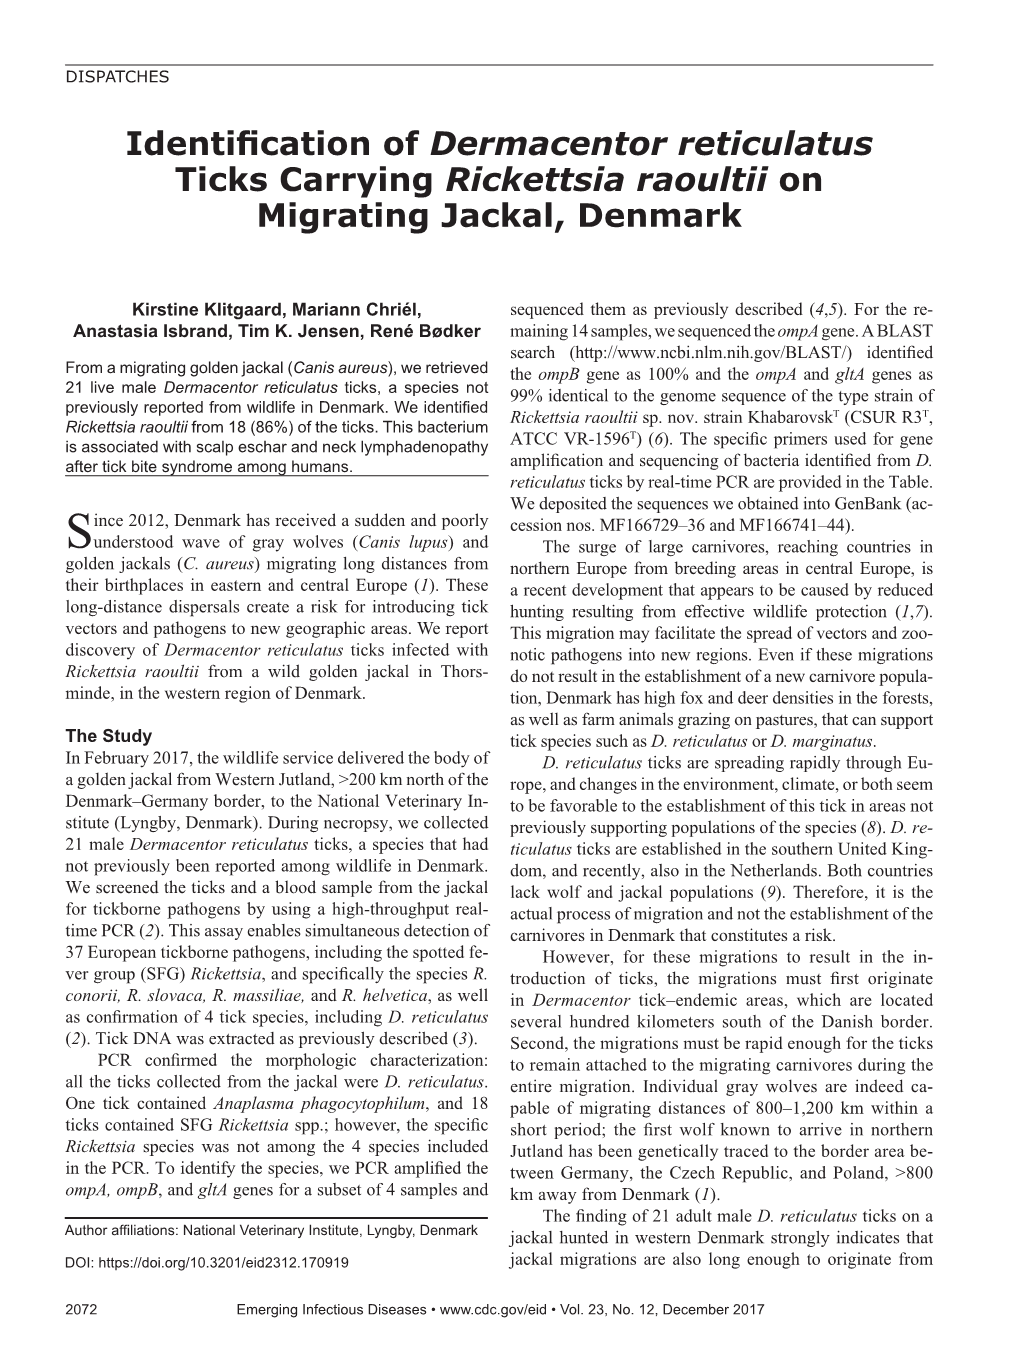 Identification of Dermacentor Reticulatus Ticks Carrying Rickettsia